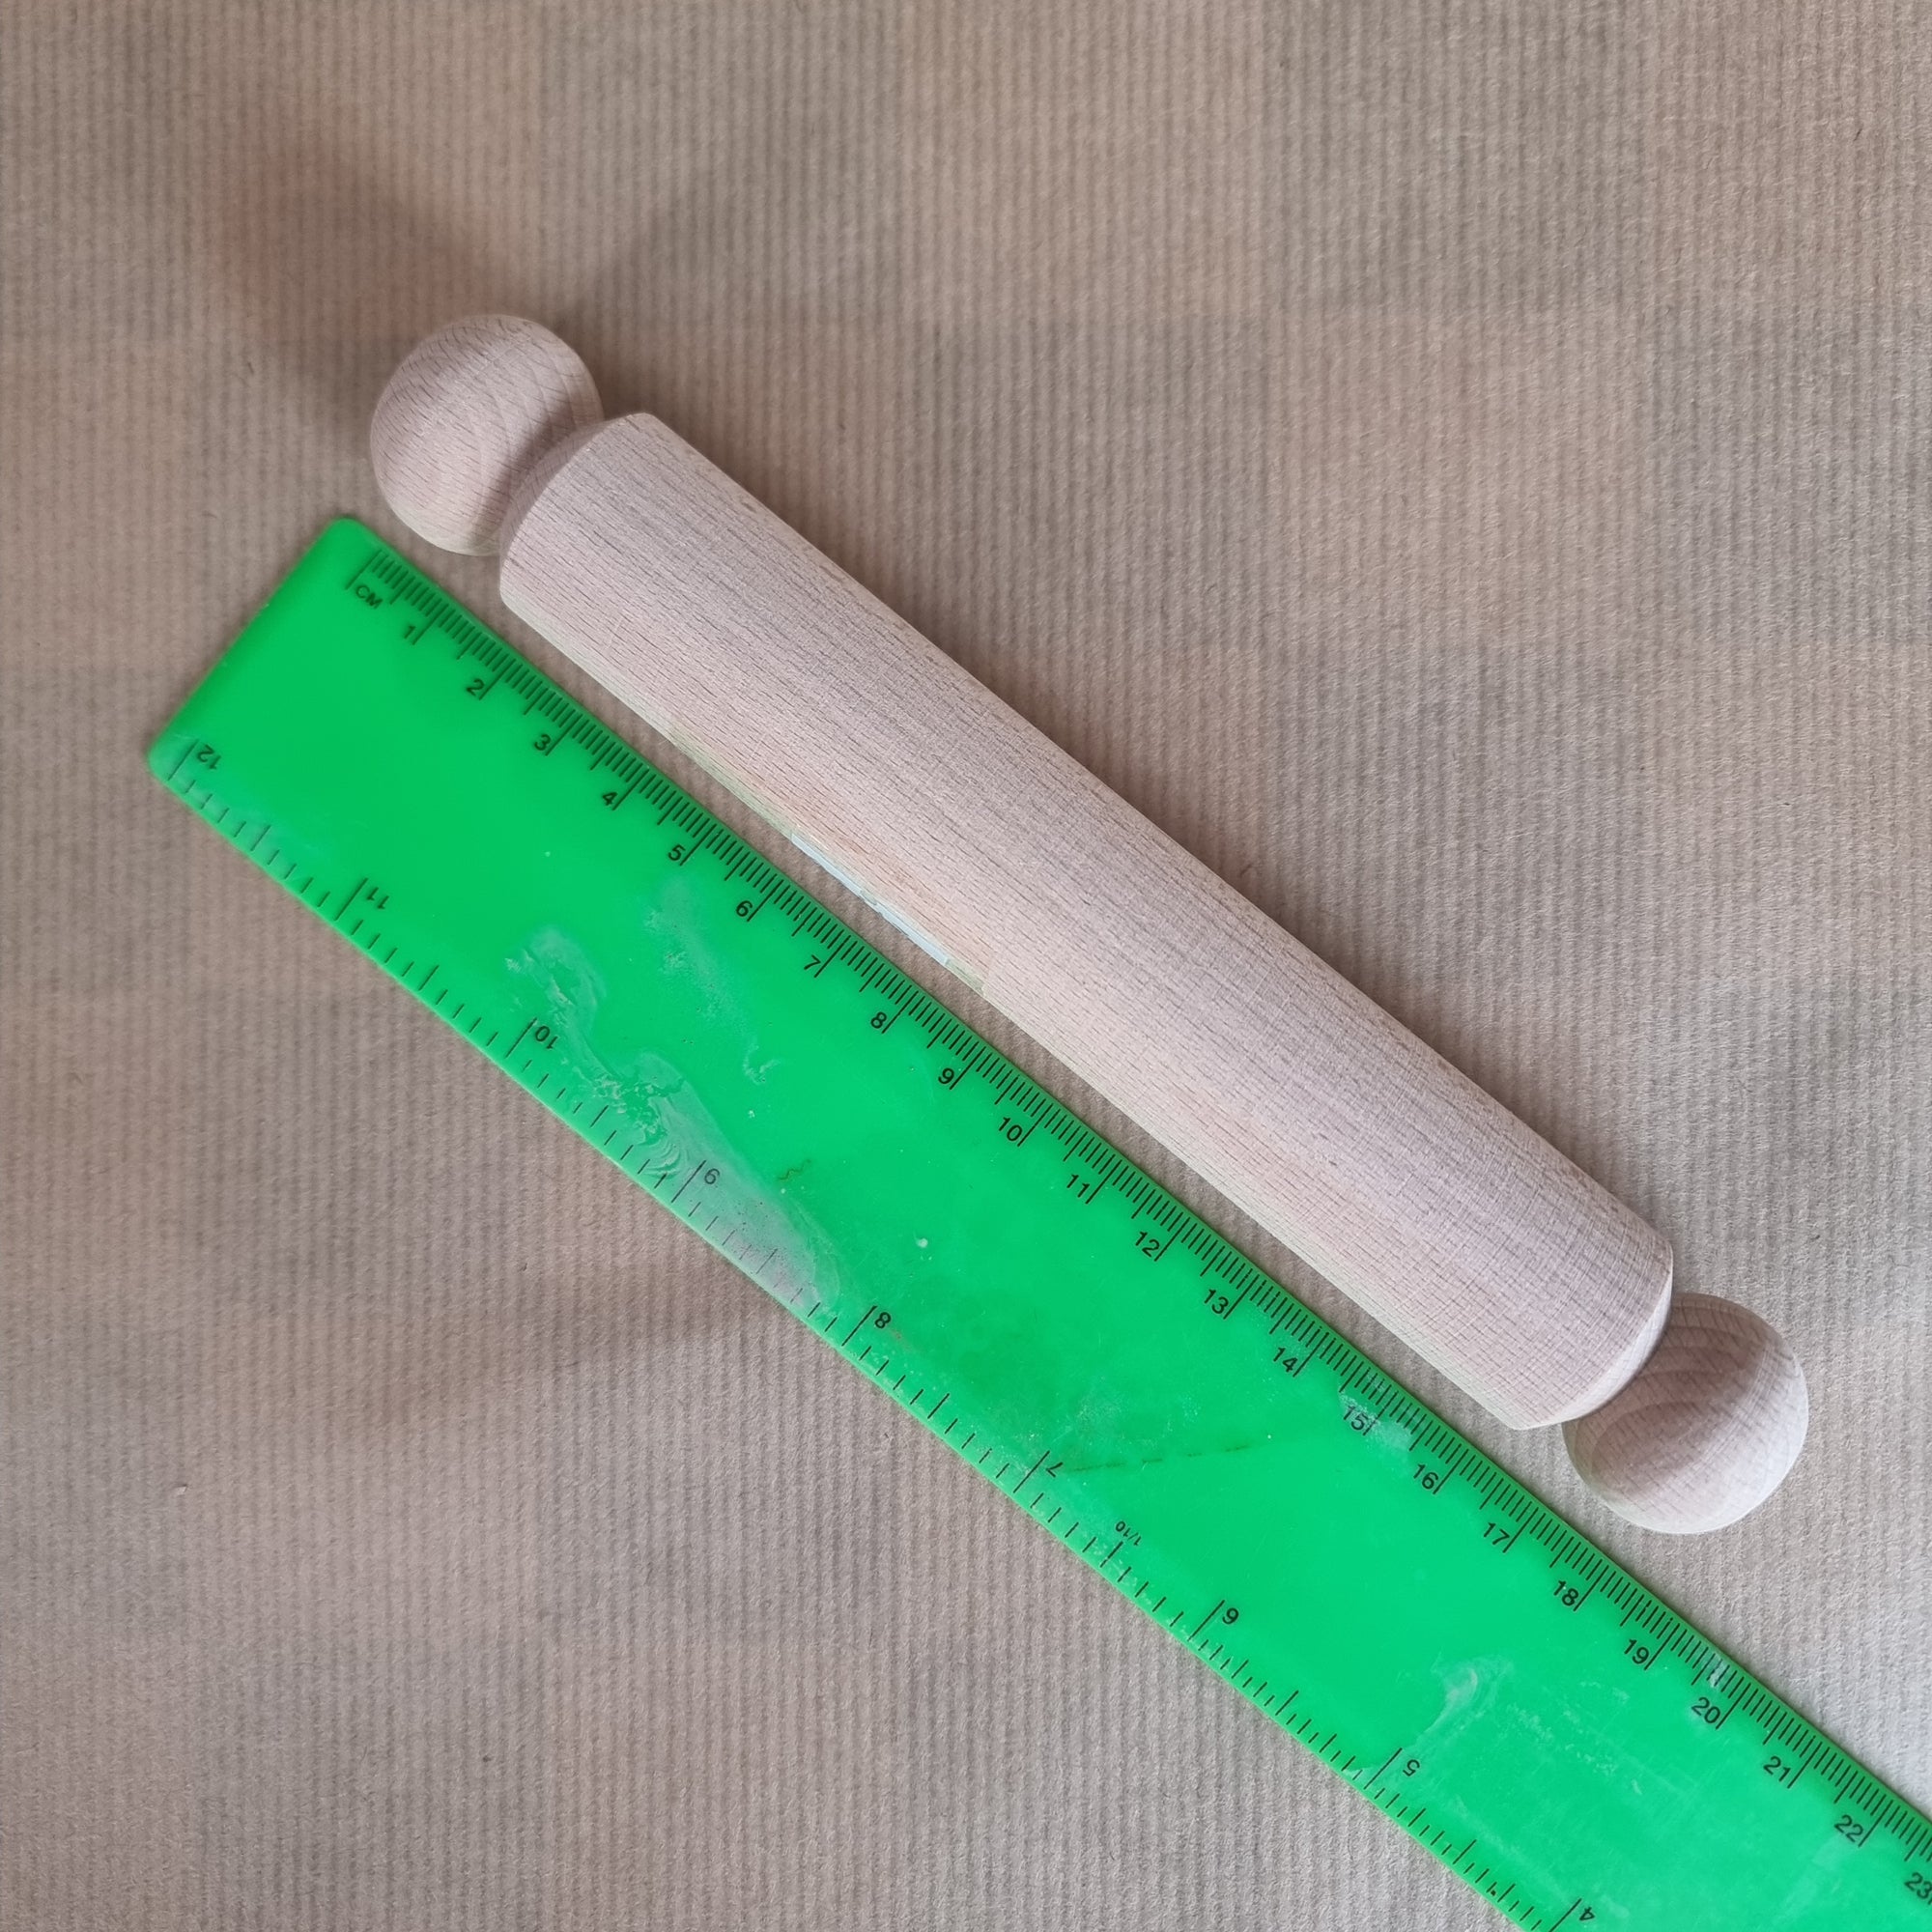 Mini Wooden Rolling Pin